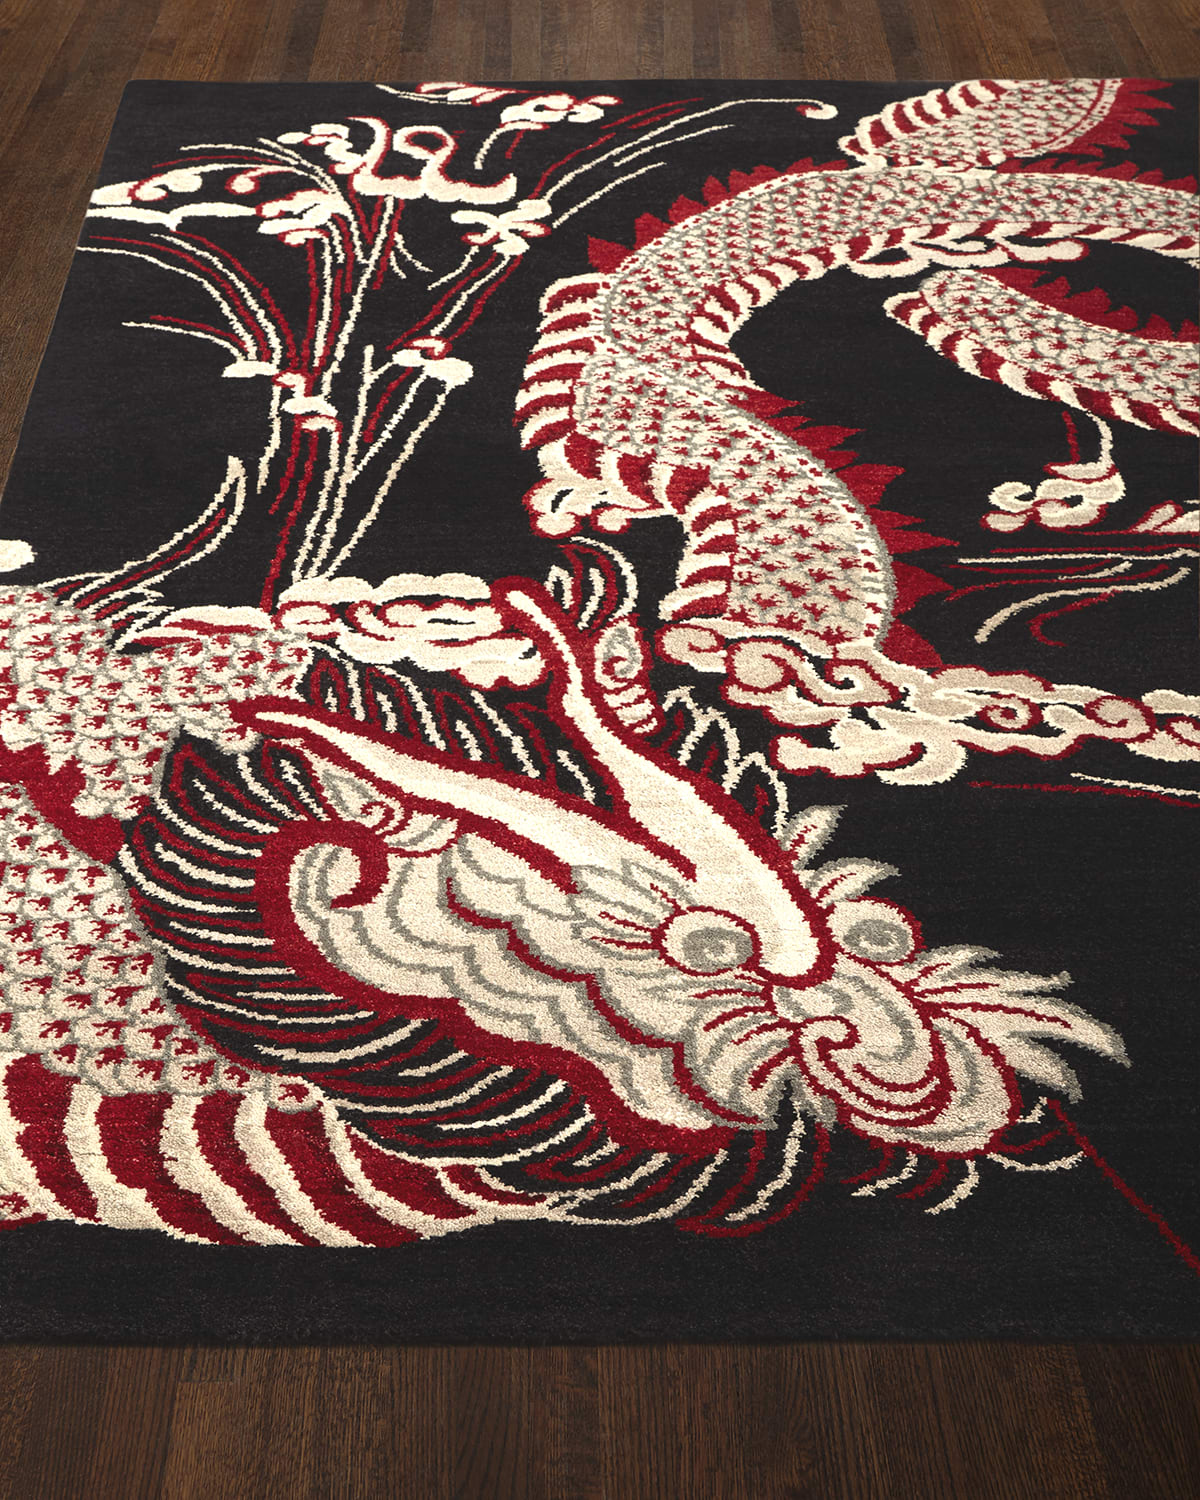 Image Josie Natori Black Dragon Rug, 4' x 6'